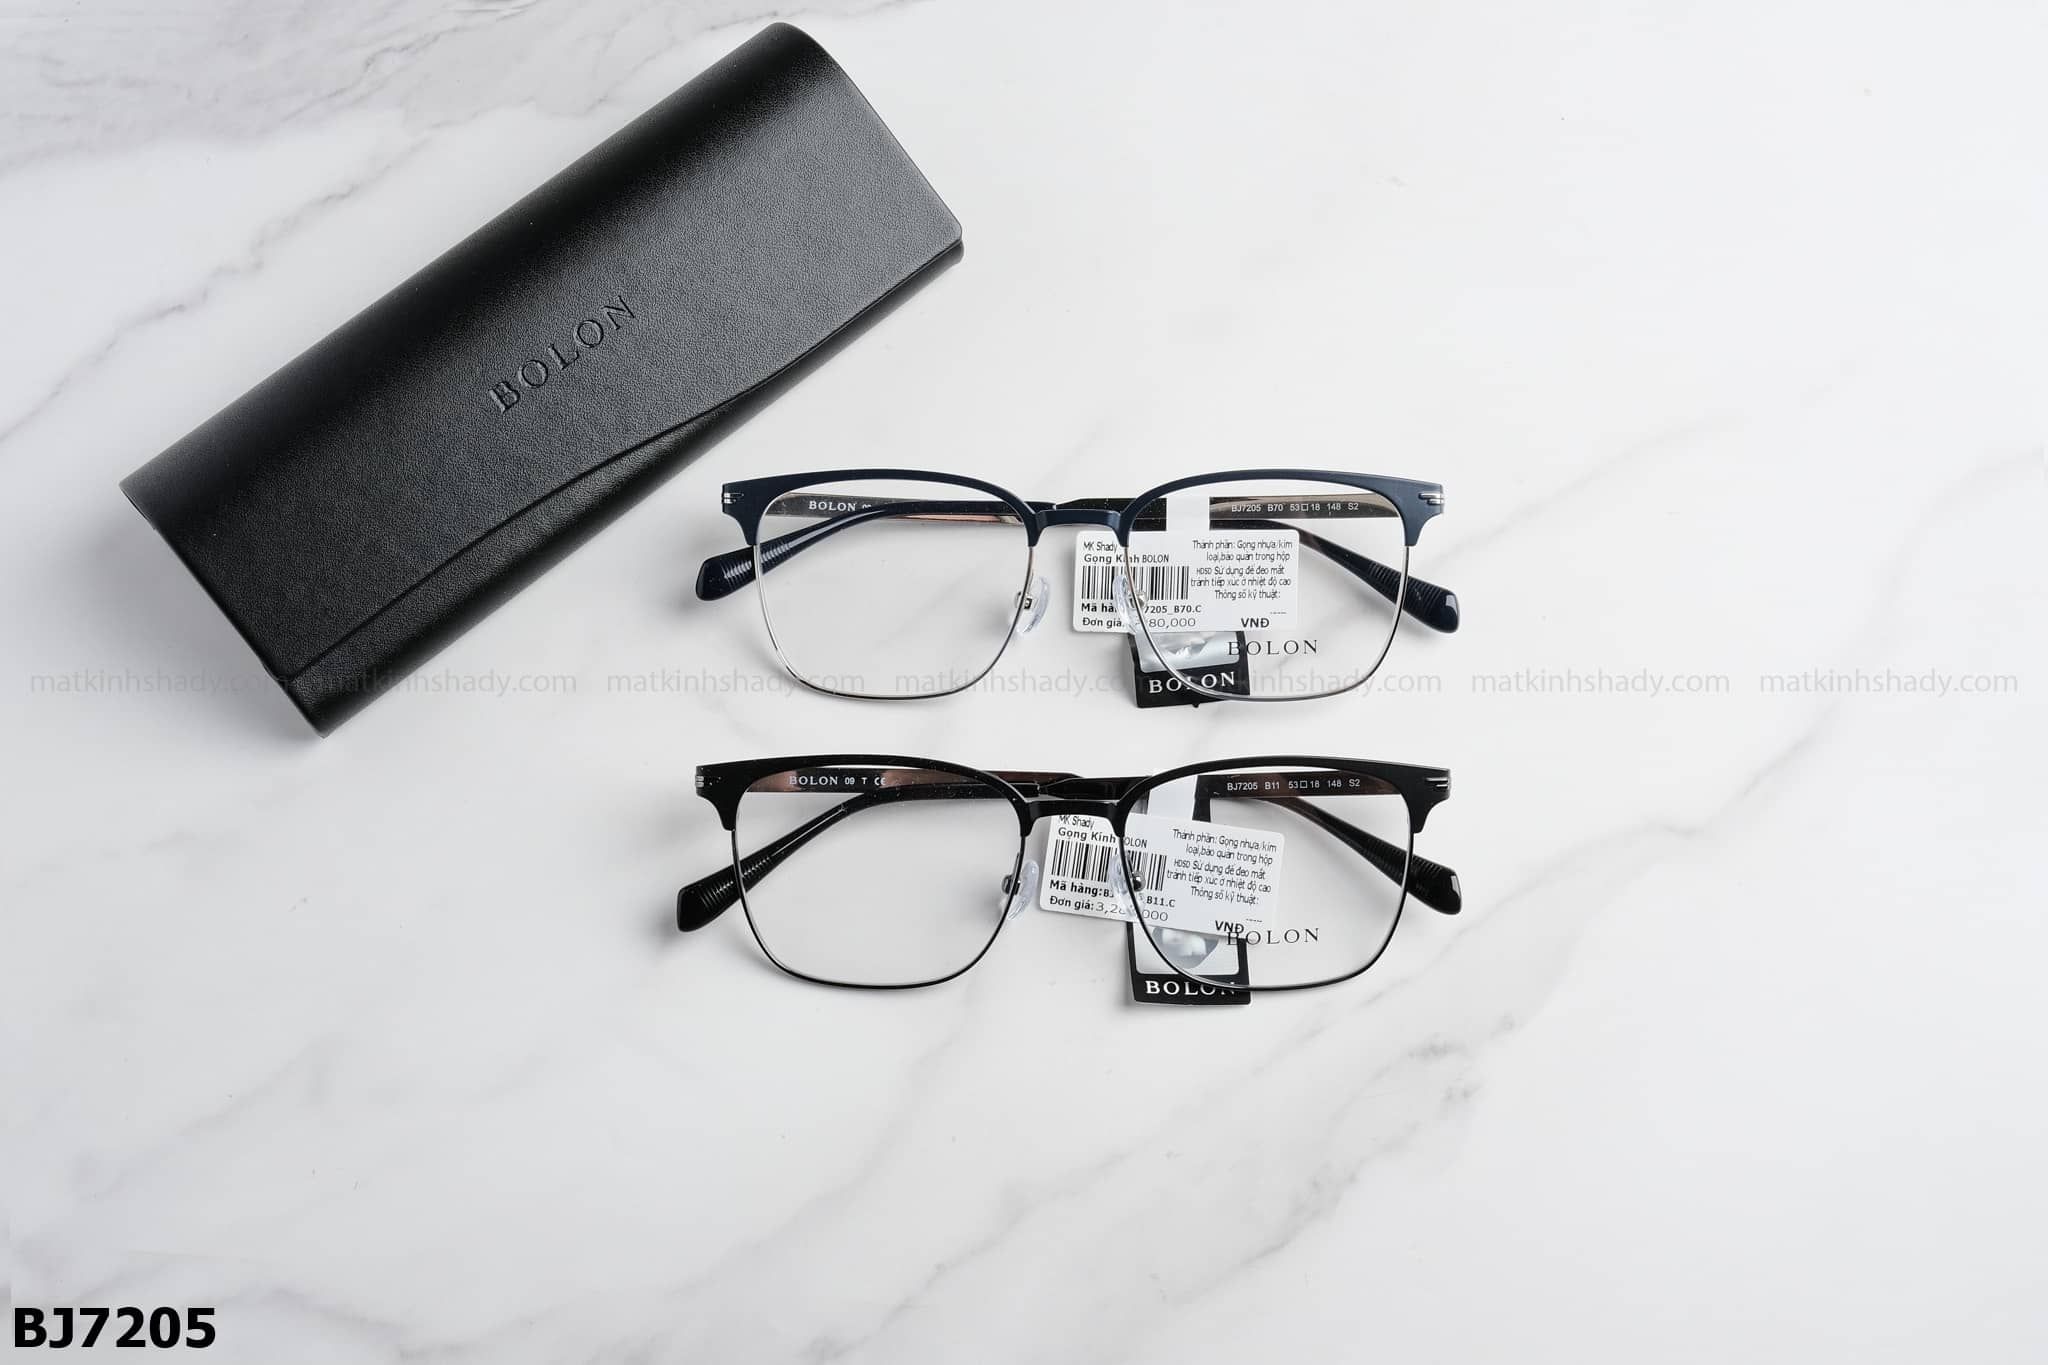  Bolon Eyewear - Glasses - BJ7205 